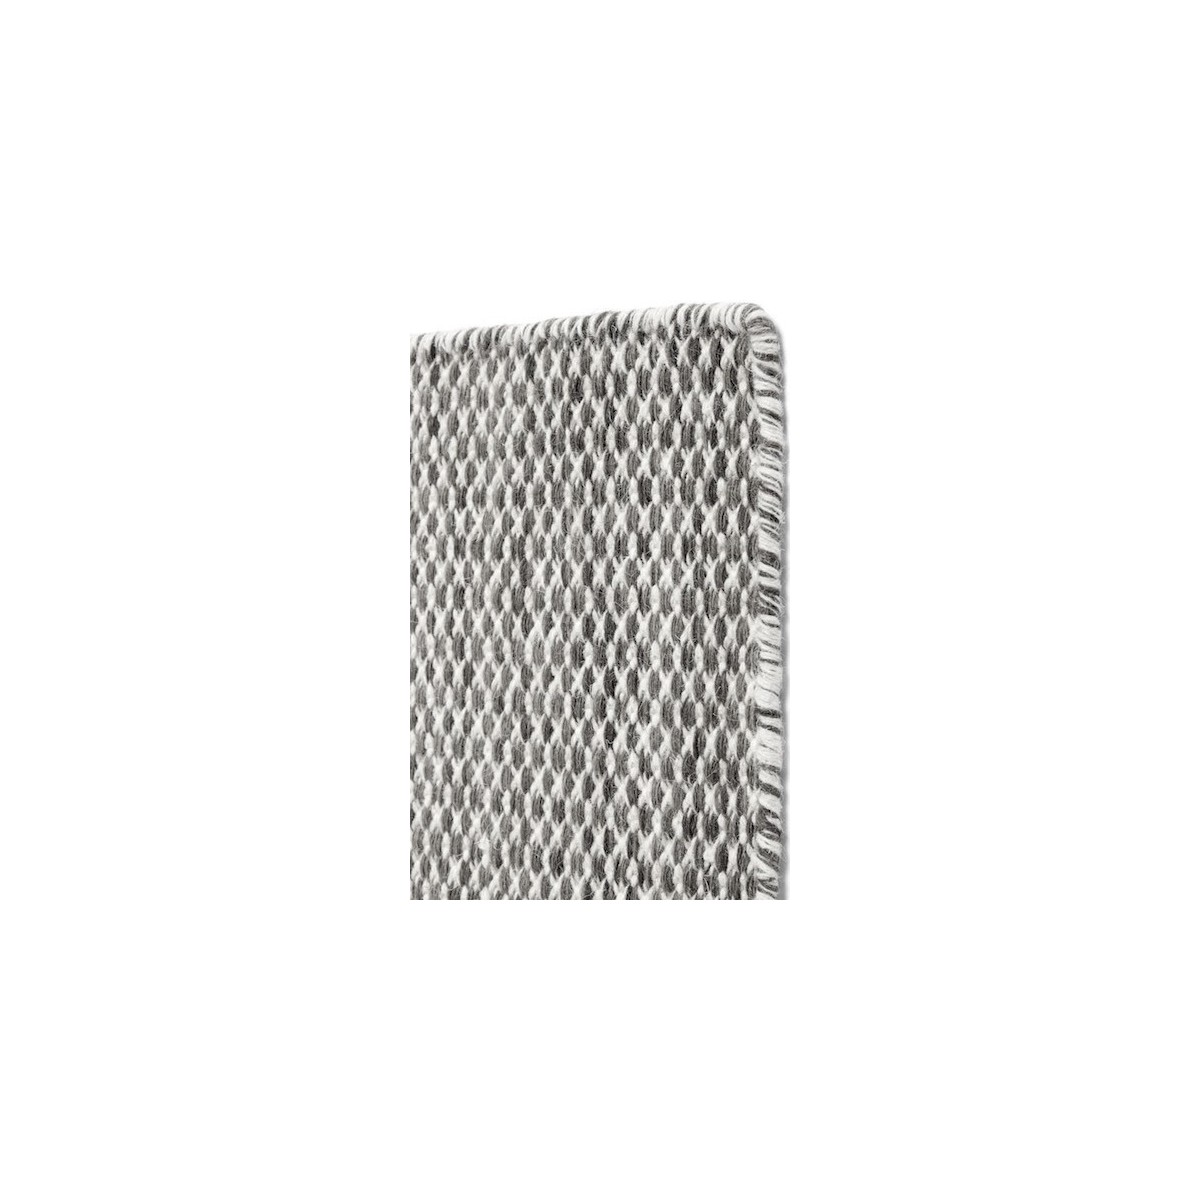 SOLD OUT 200x300cm - grey - Moiré Kelim rug